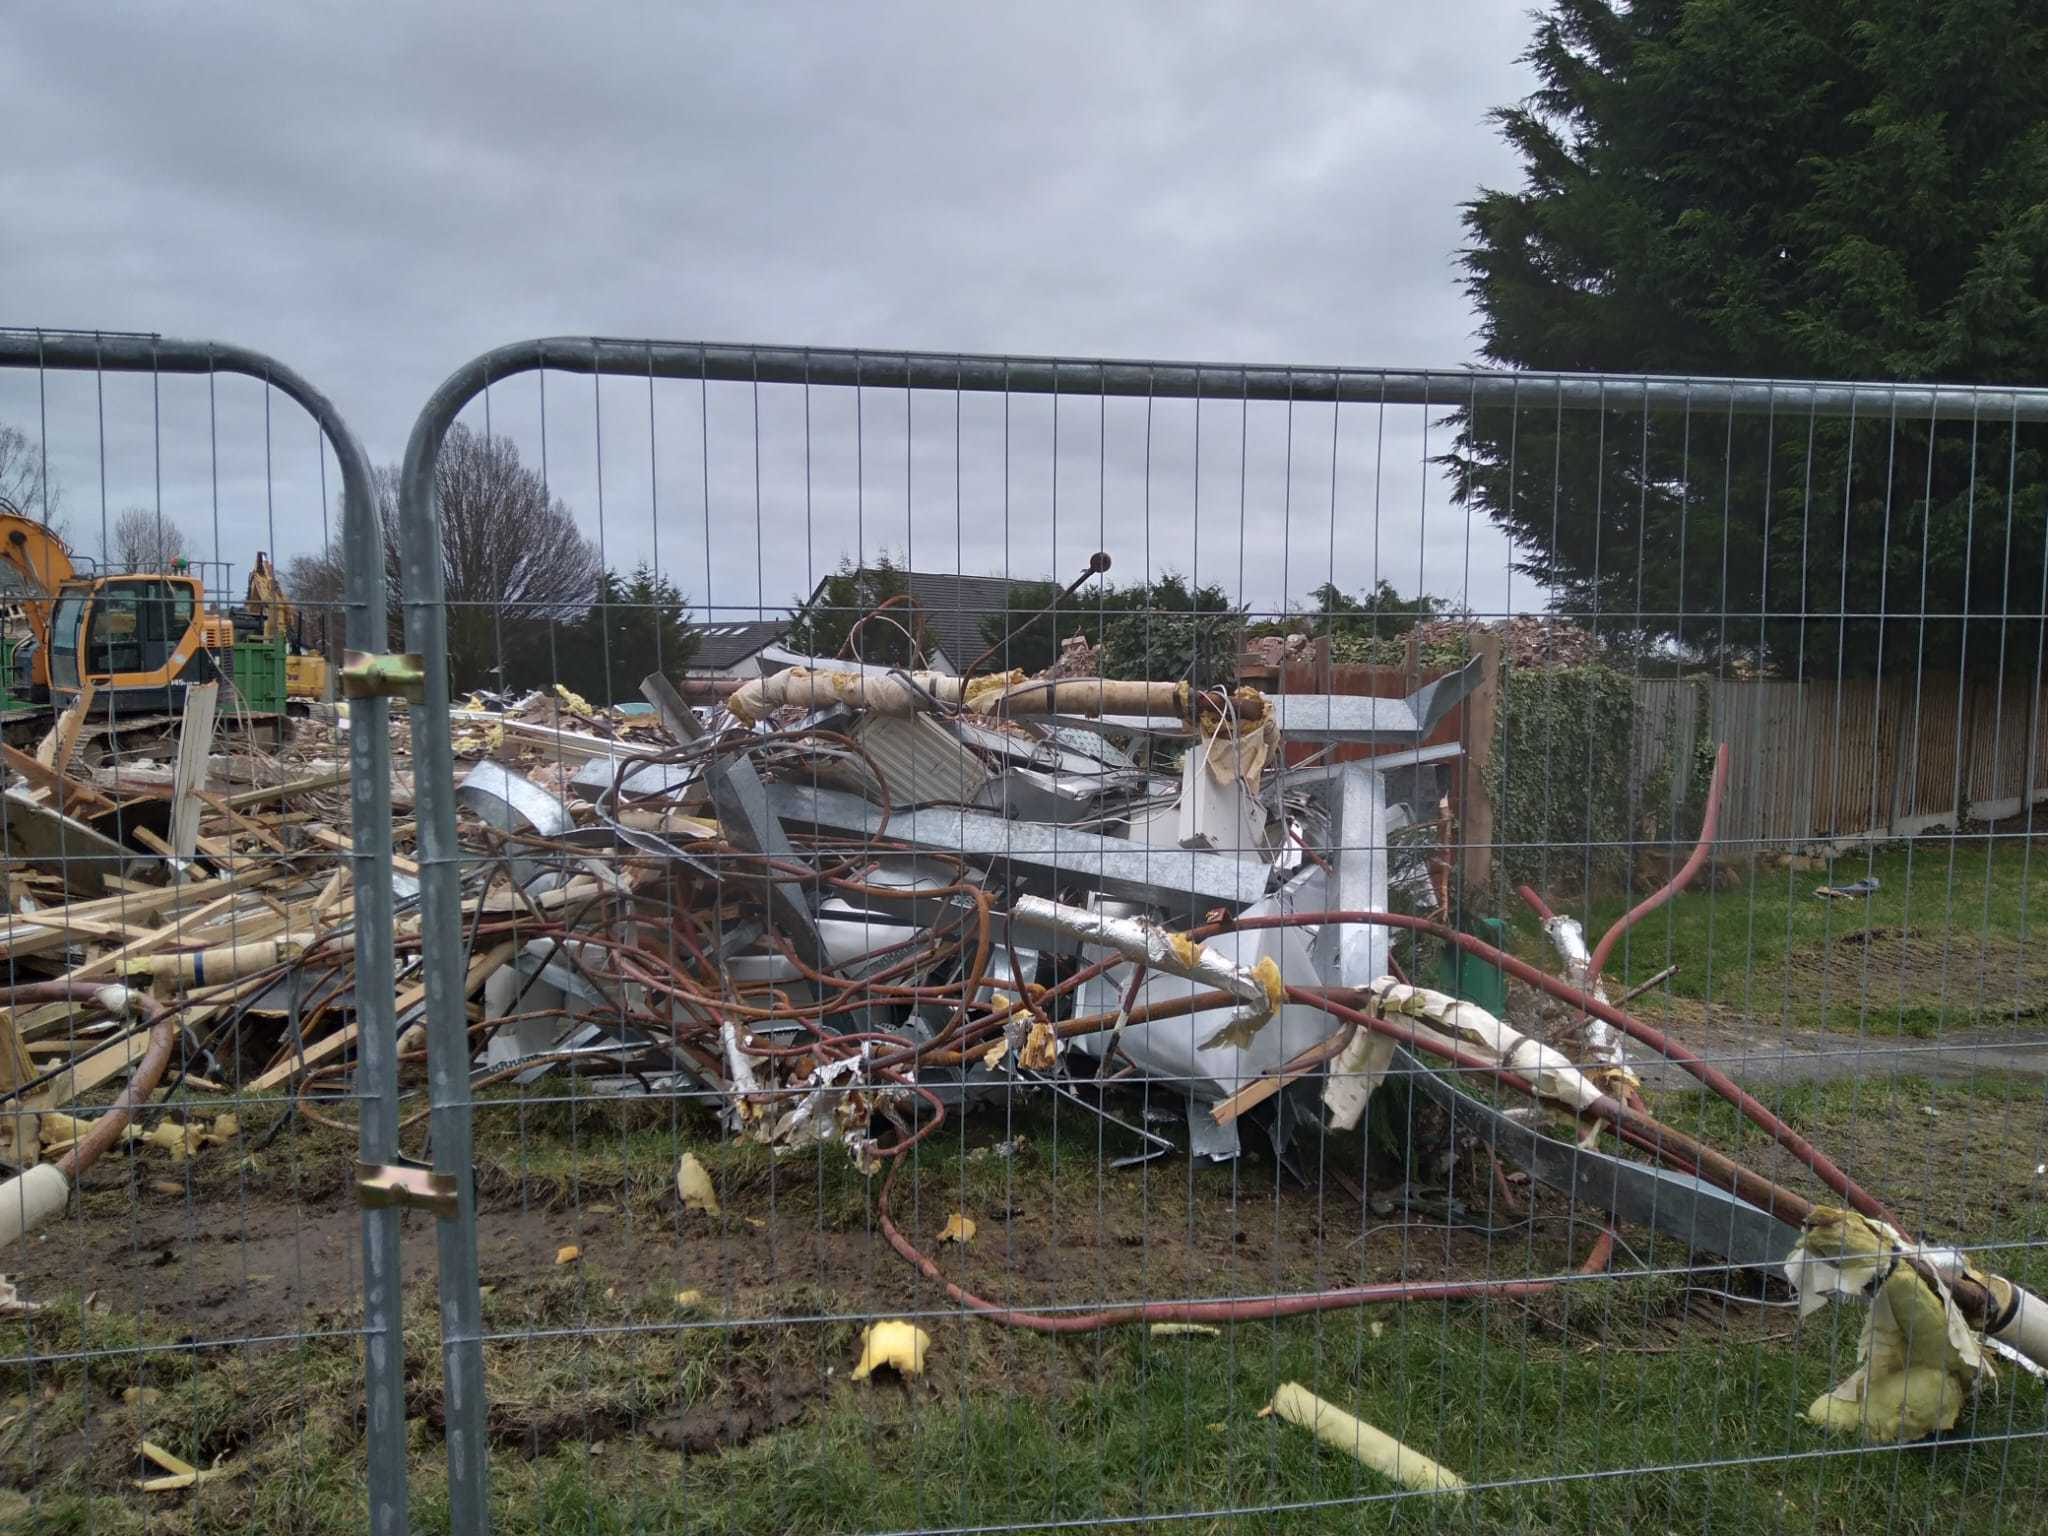 Radcliffe Meadows Nursing Home in Culcheth has been demolished